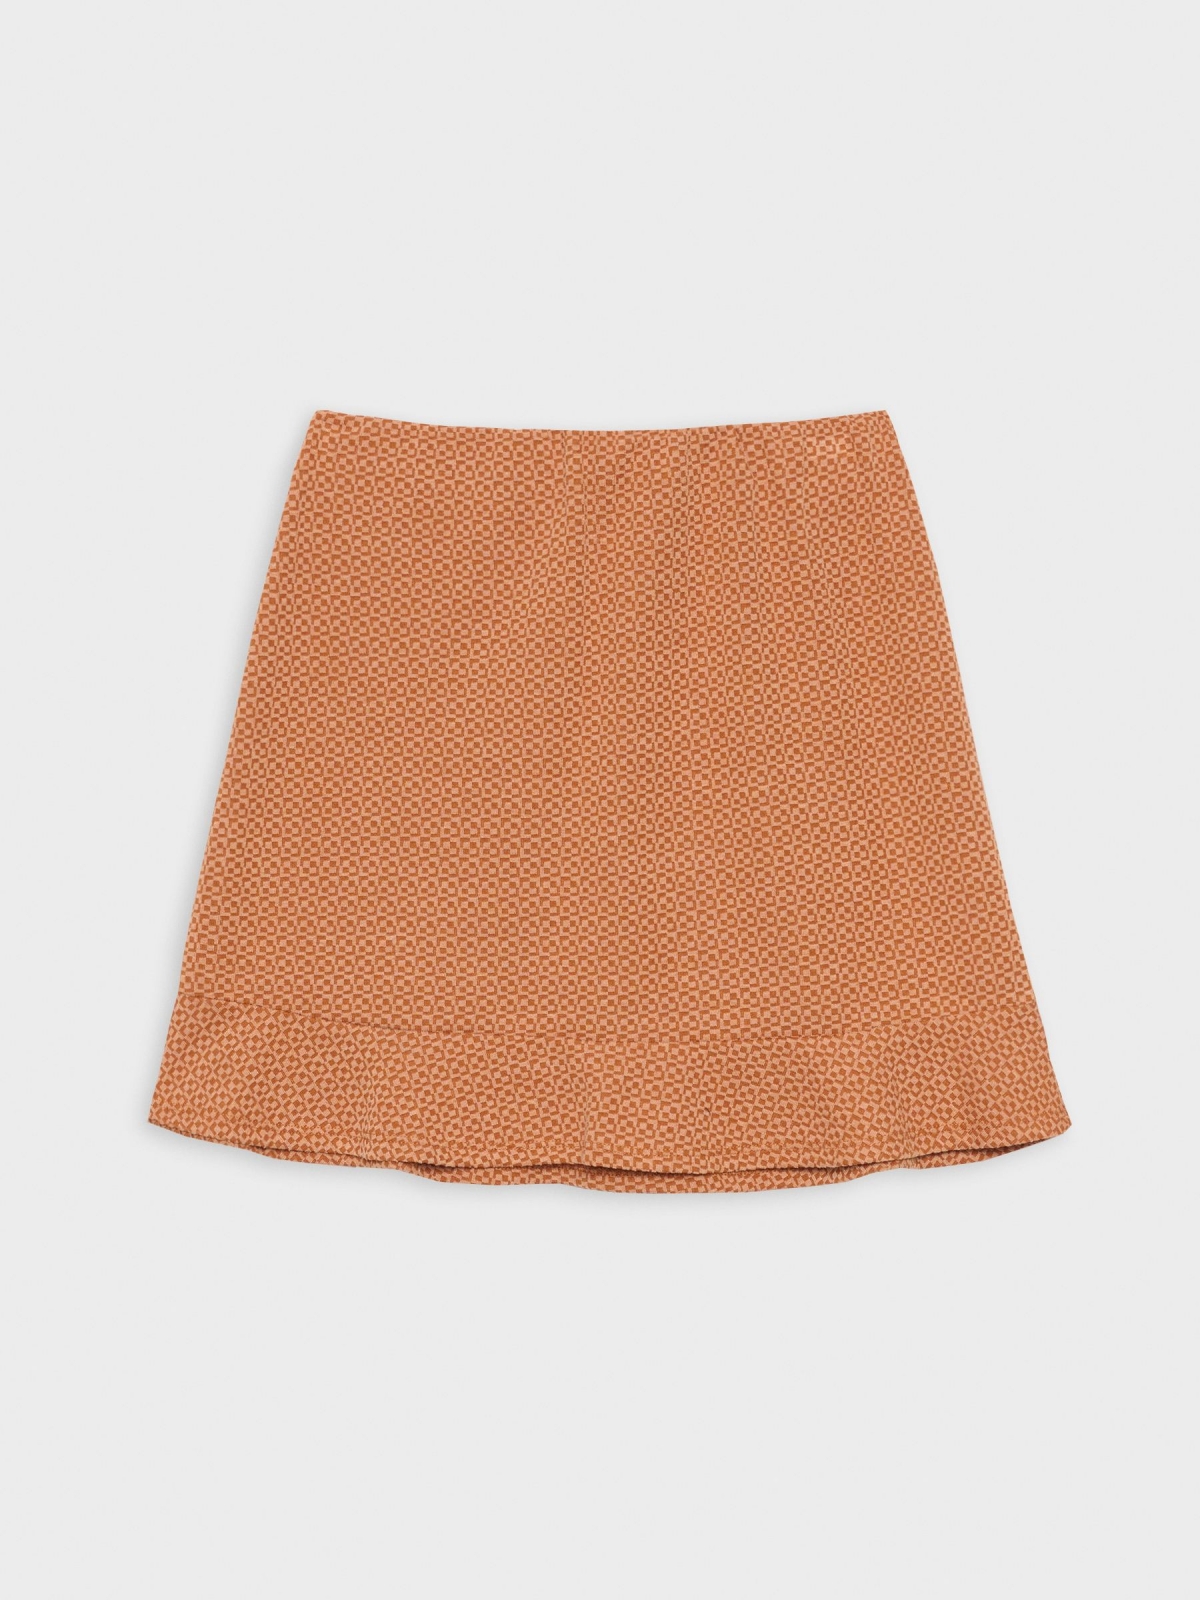  Ruffled jacquard skirt brown